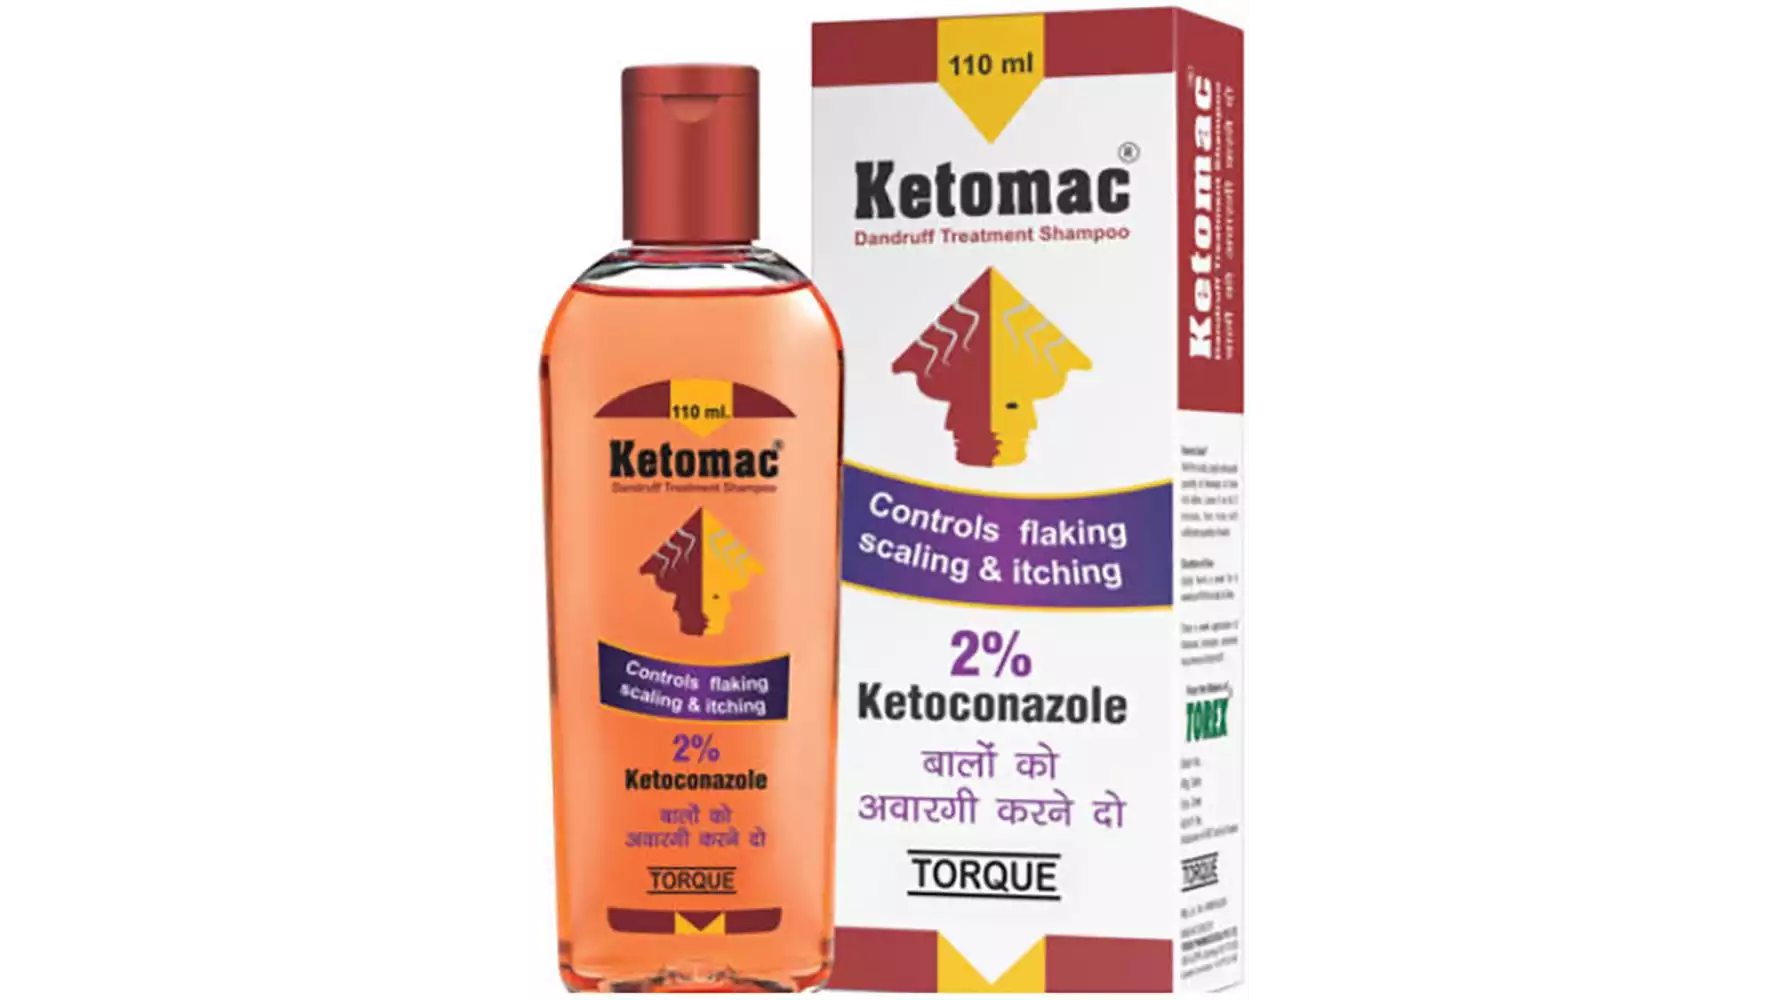 Torque Ketomac Dandruff Treatment Ketoconazole Shampoo (110ml)